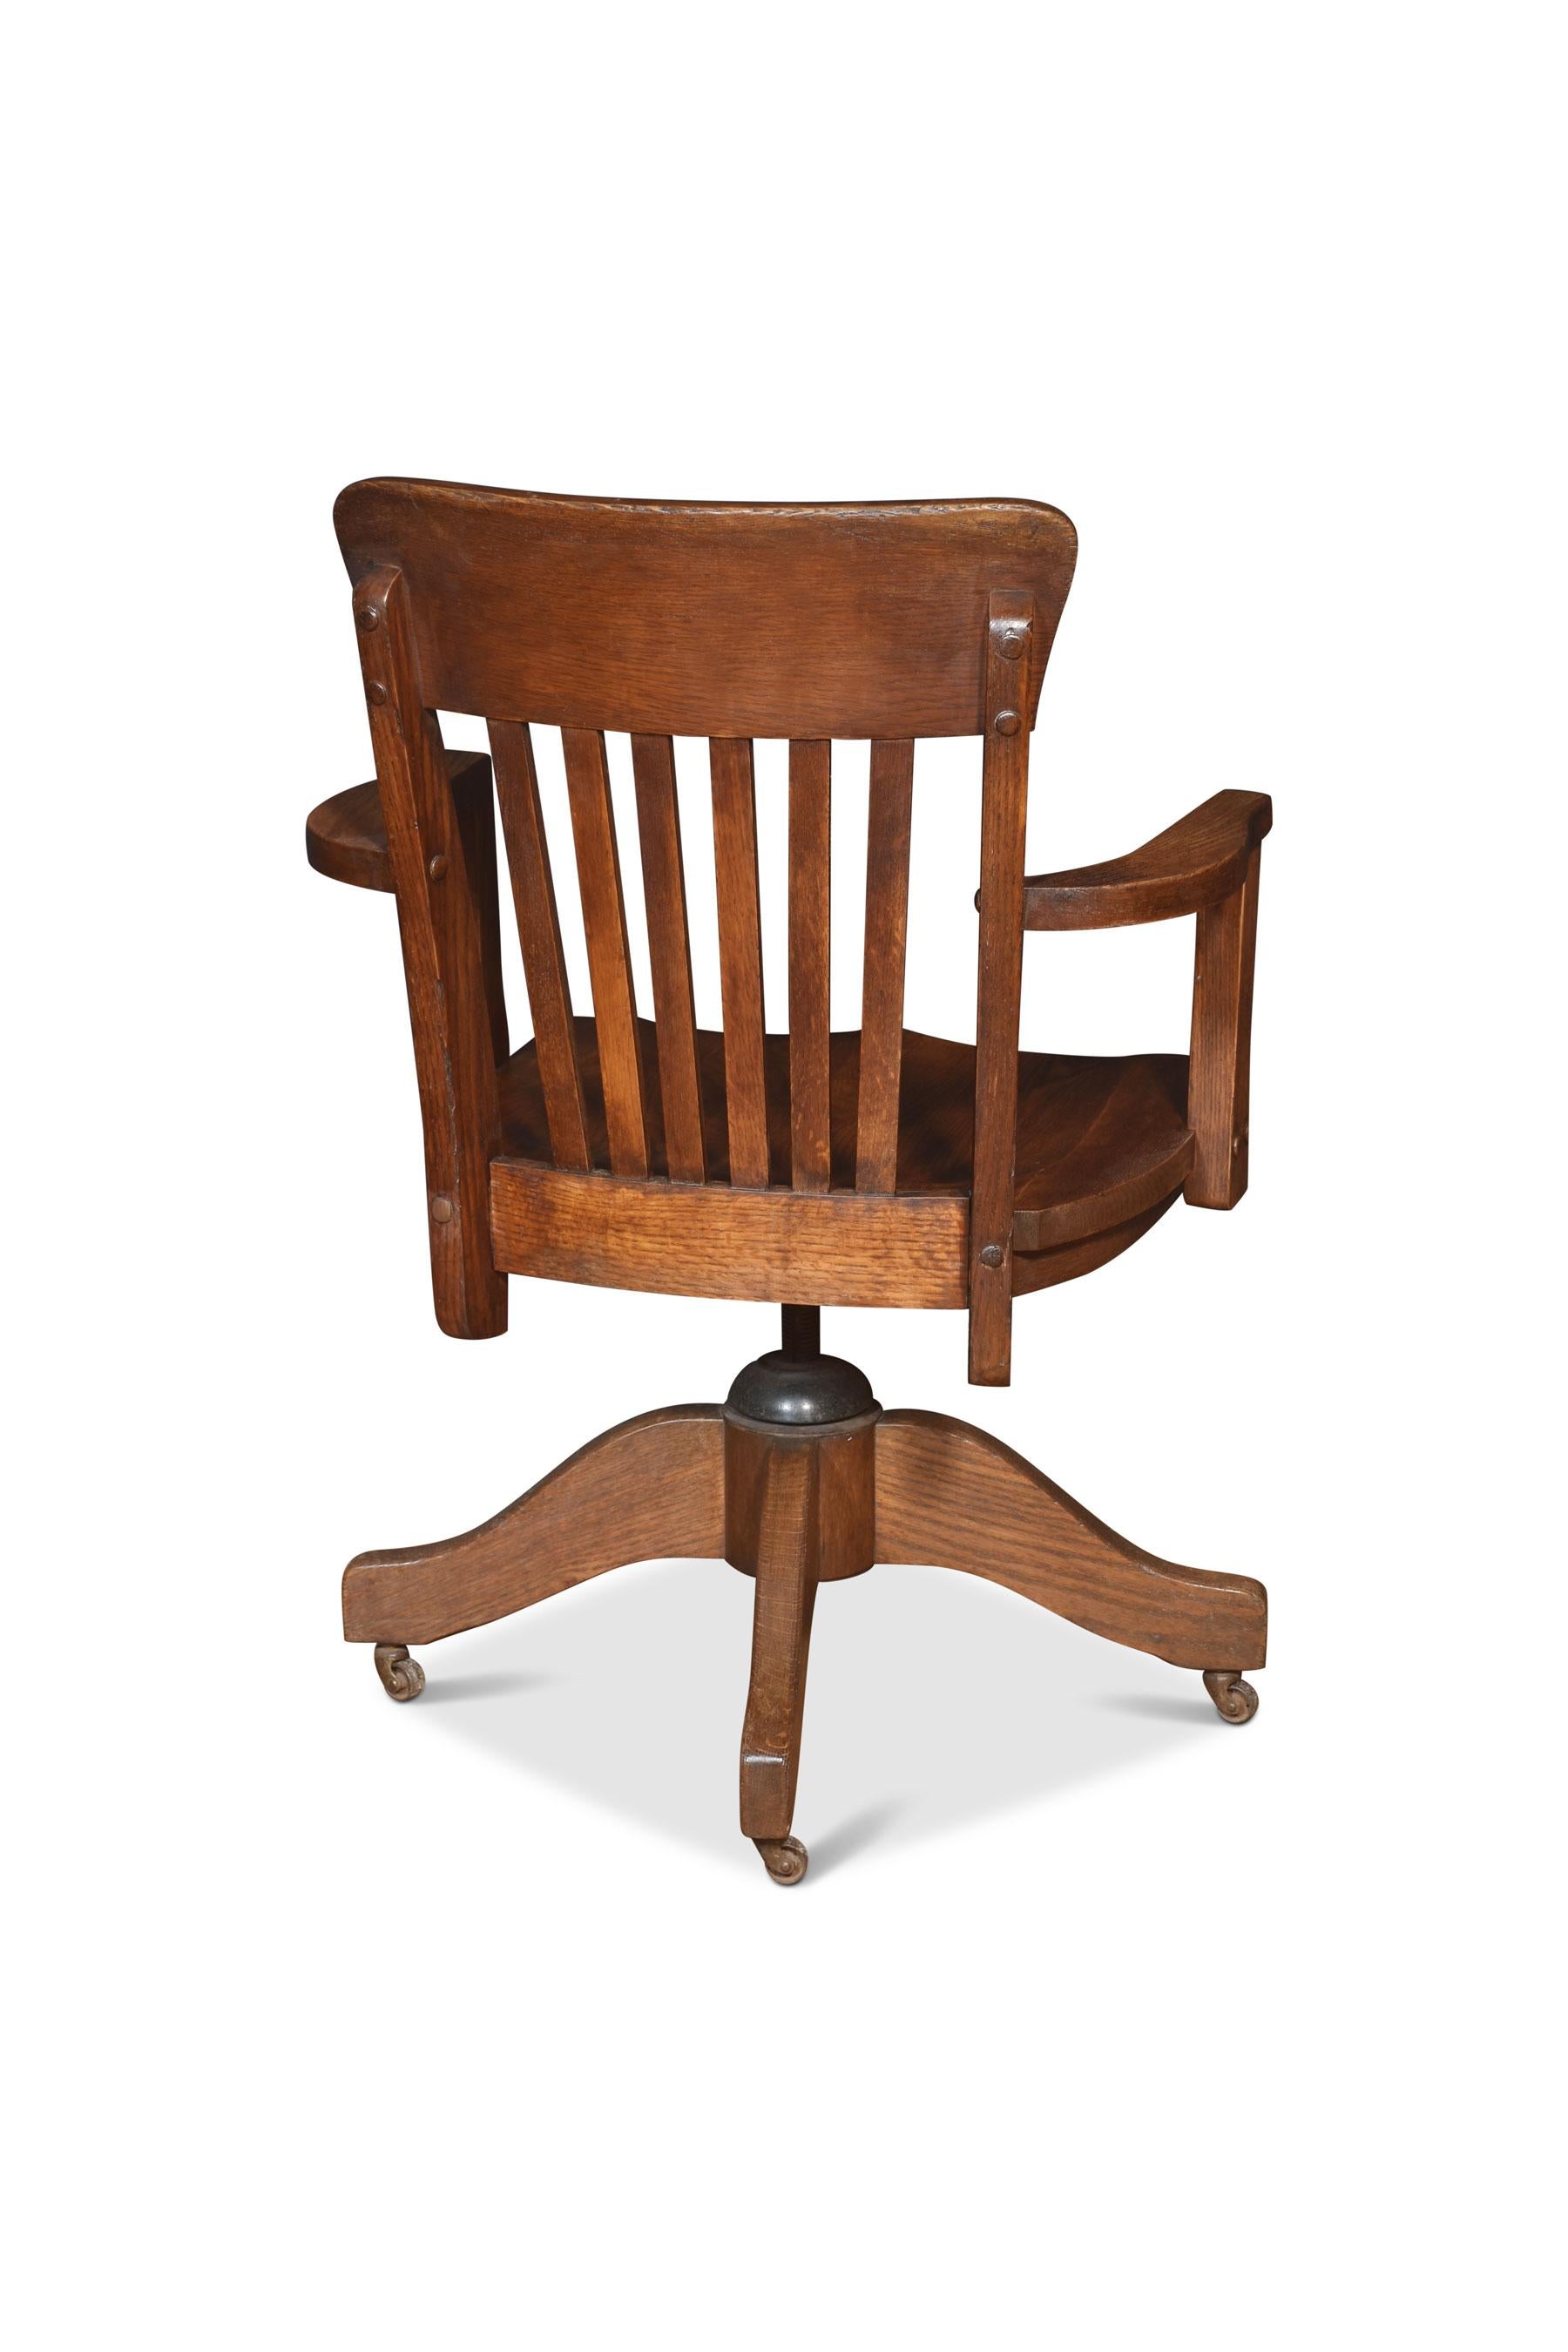 20th Century Oak revolving desk chair For Sale